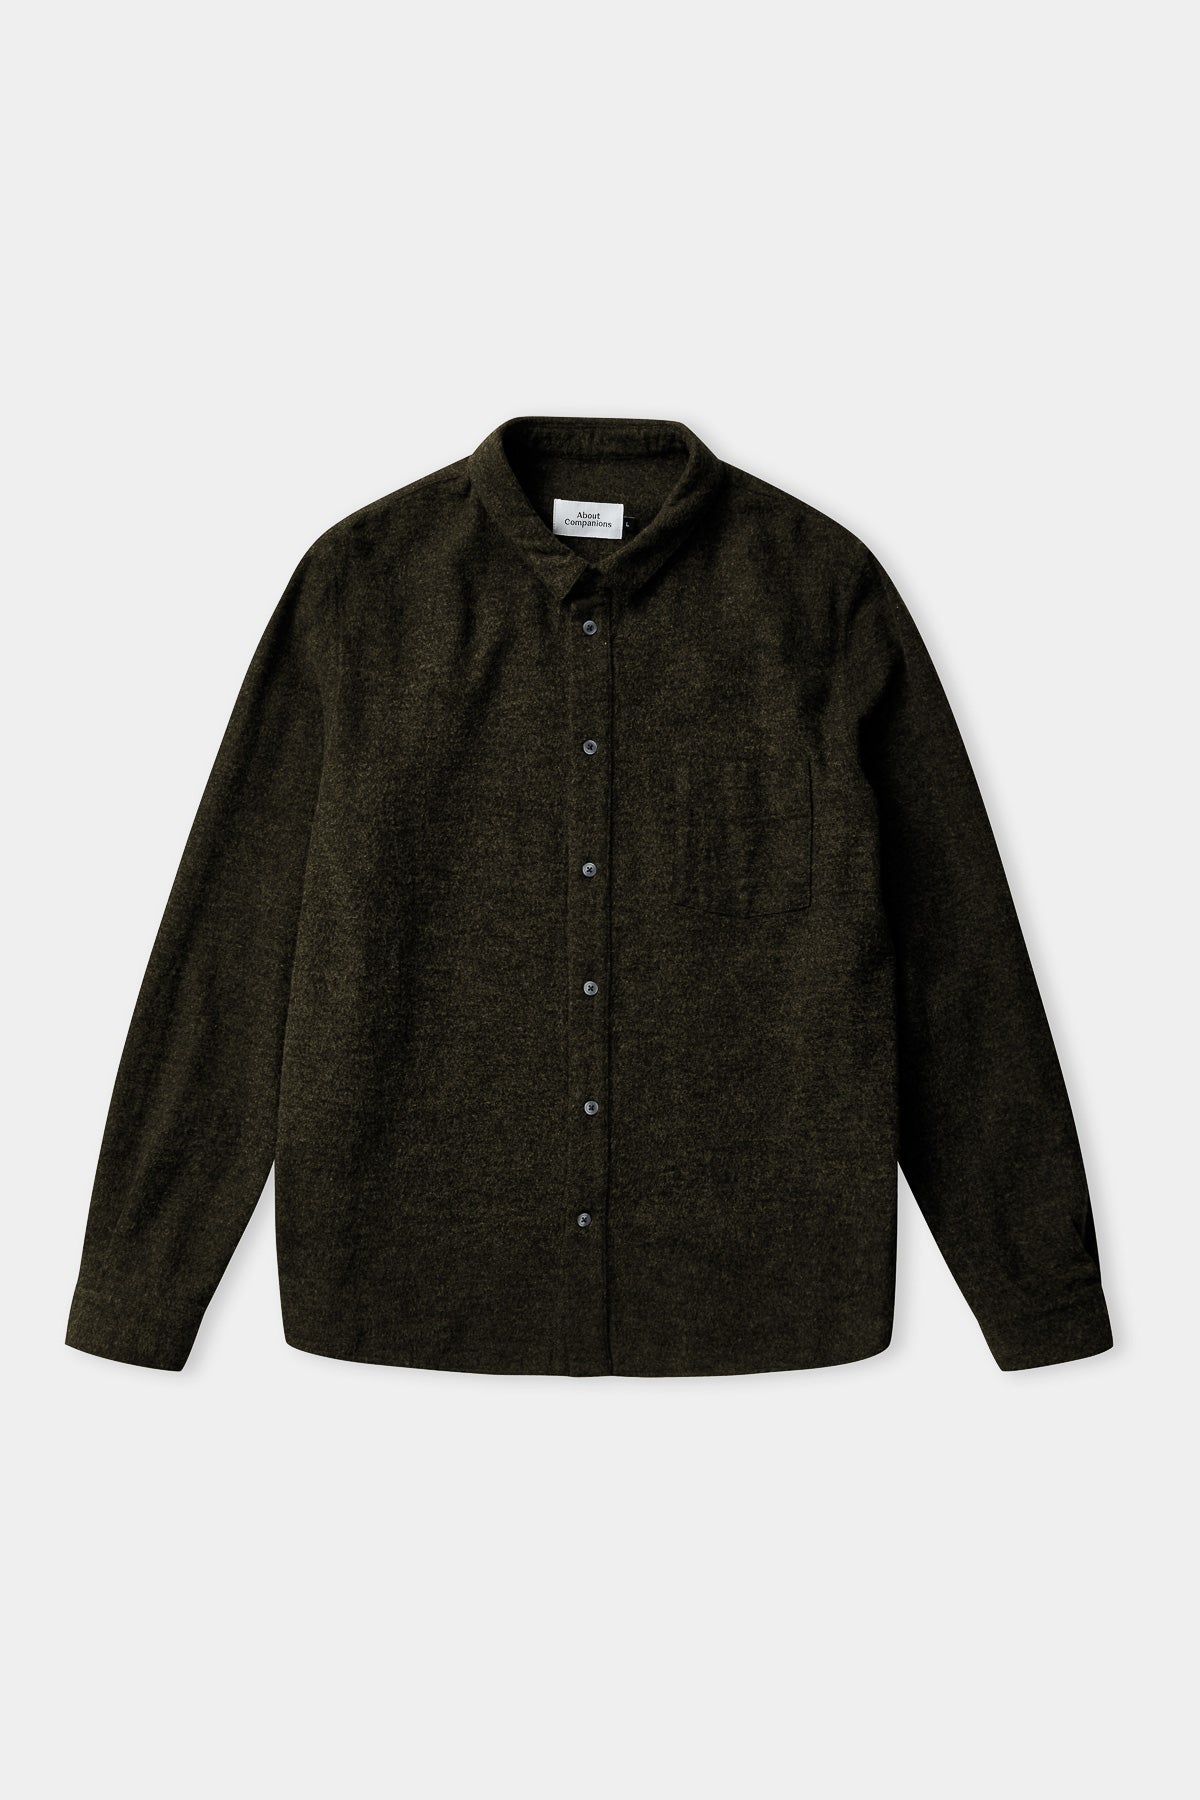 SIMON shirt eco forest flannel